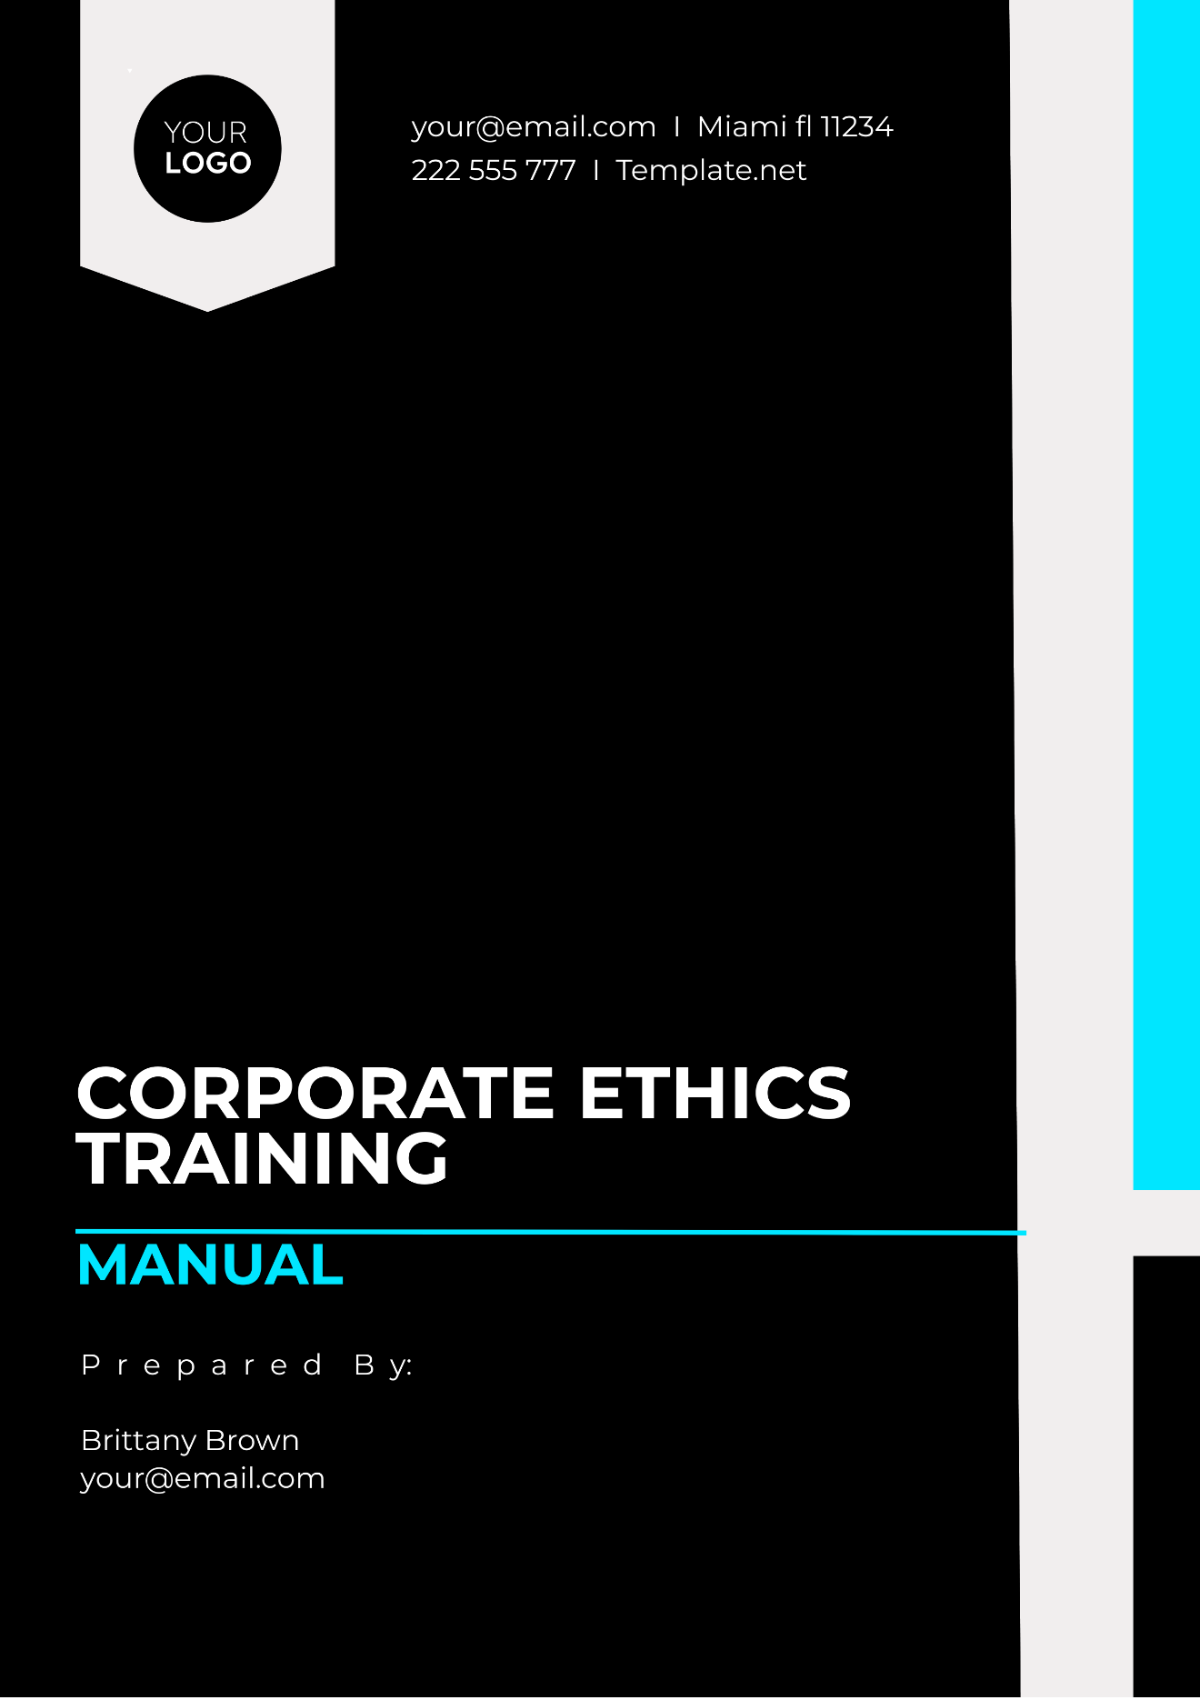 Corporate Ethics Training Manual Template